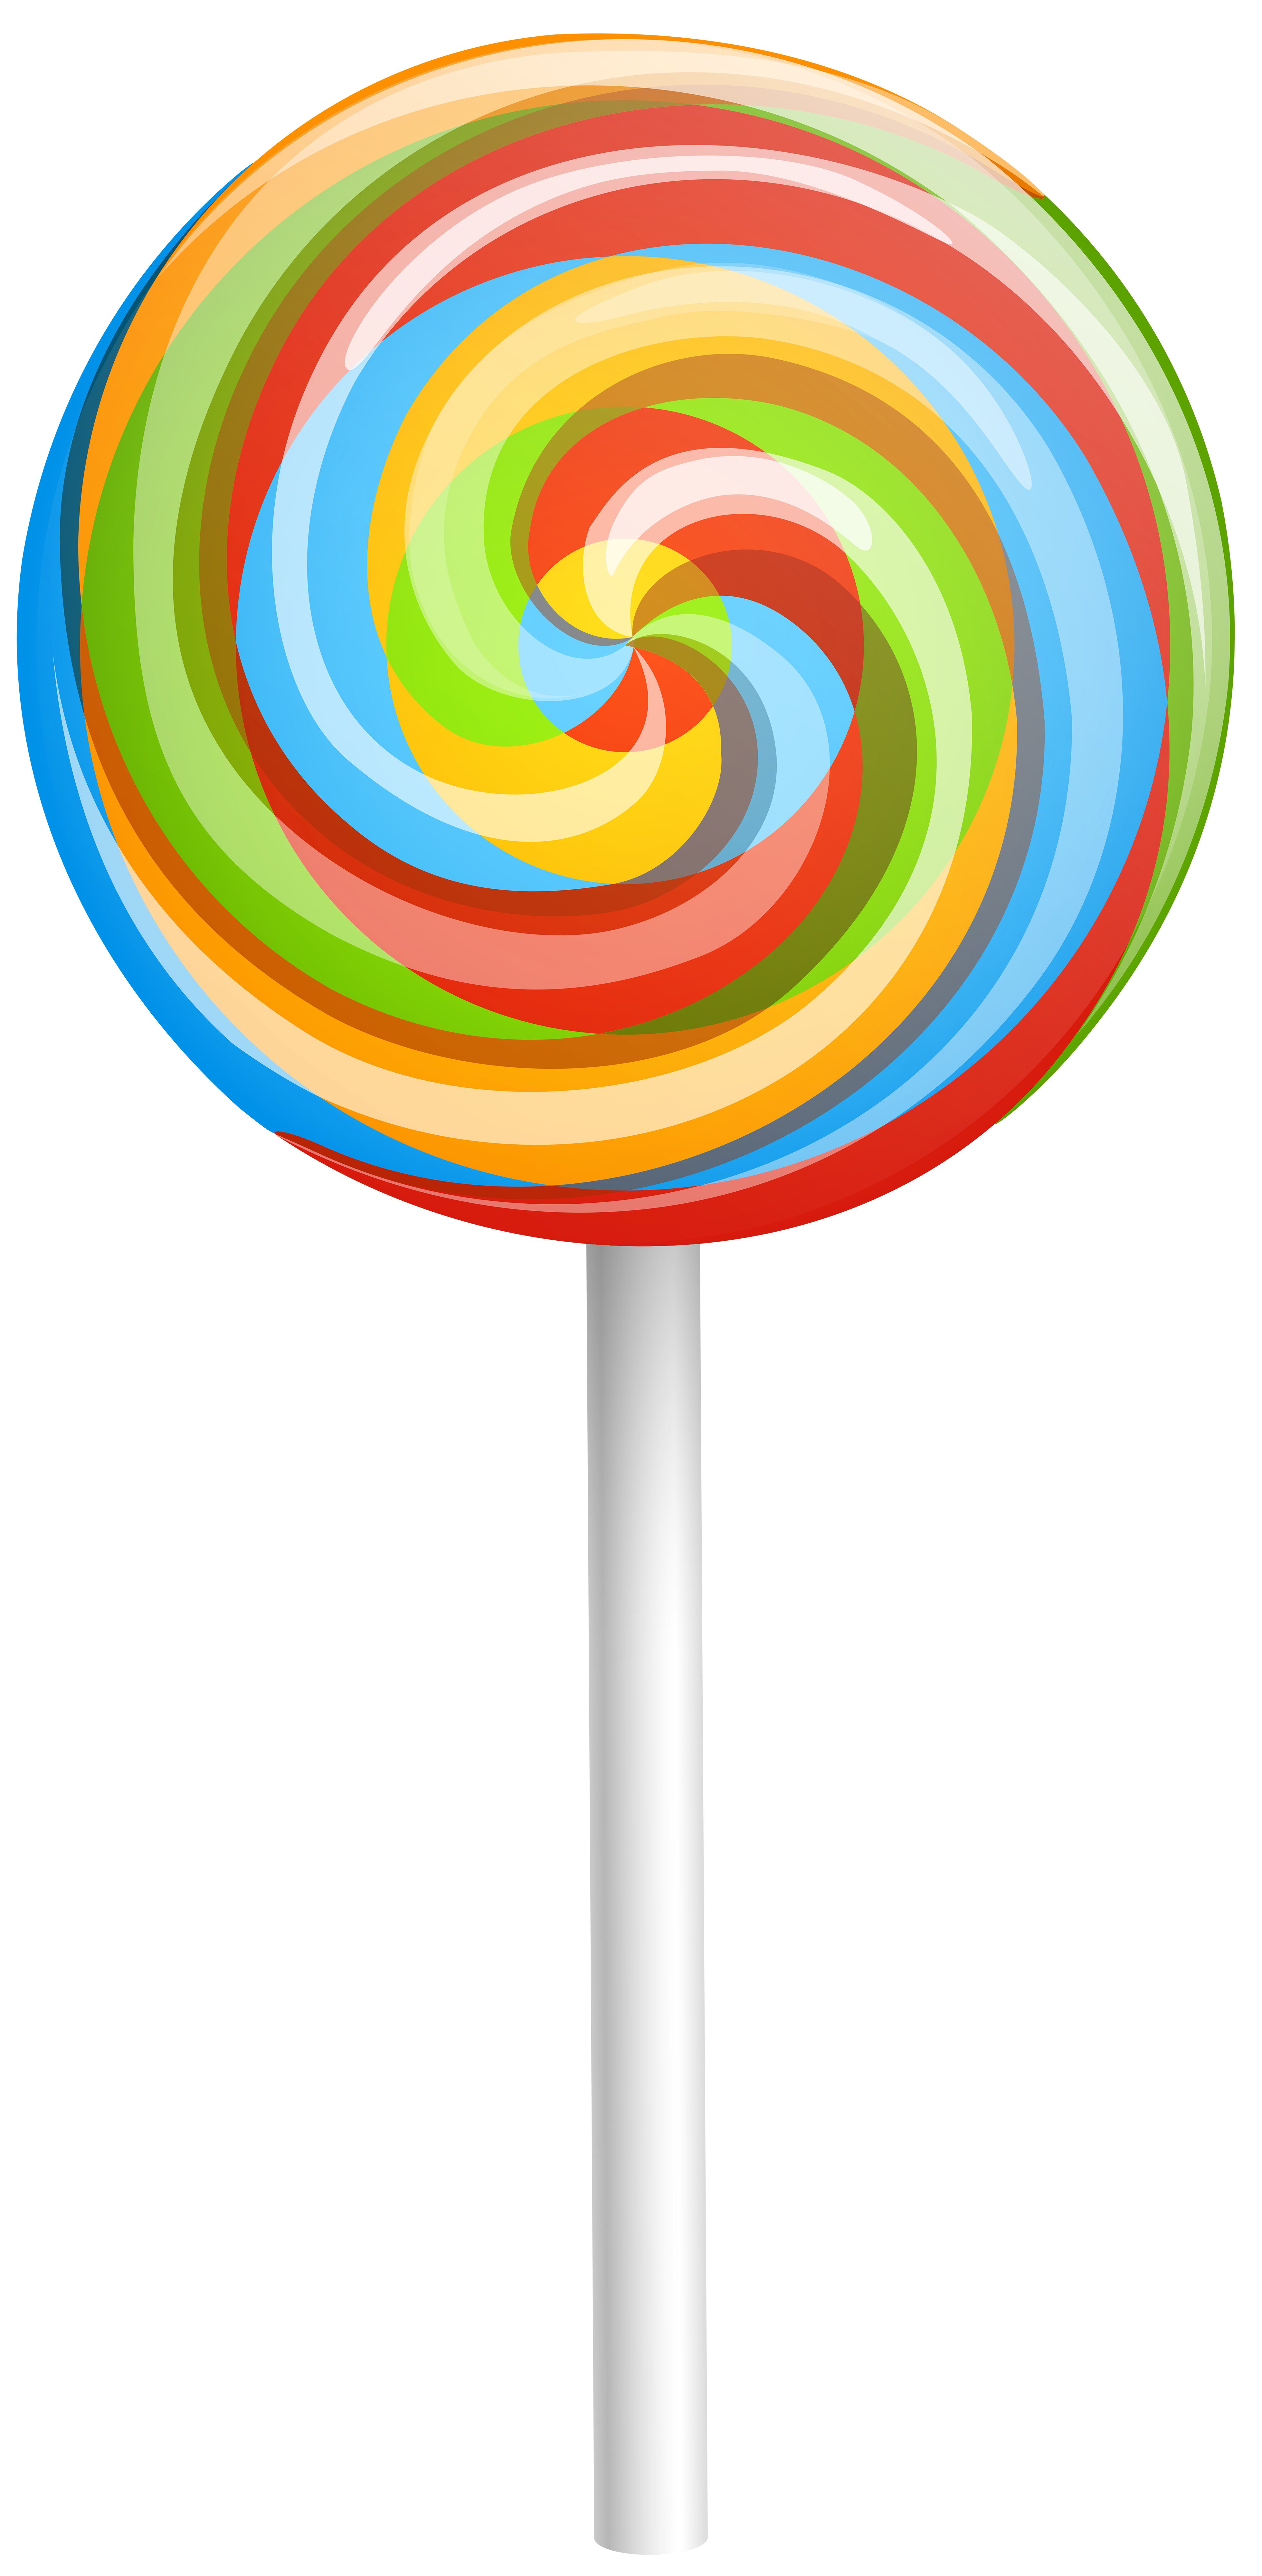 Lollipop free to use cliparts 3 - Clipartix